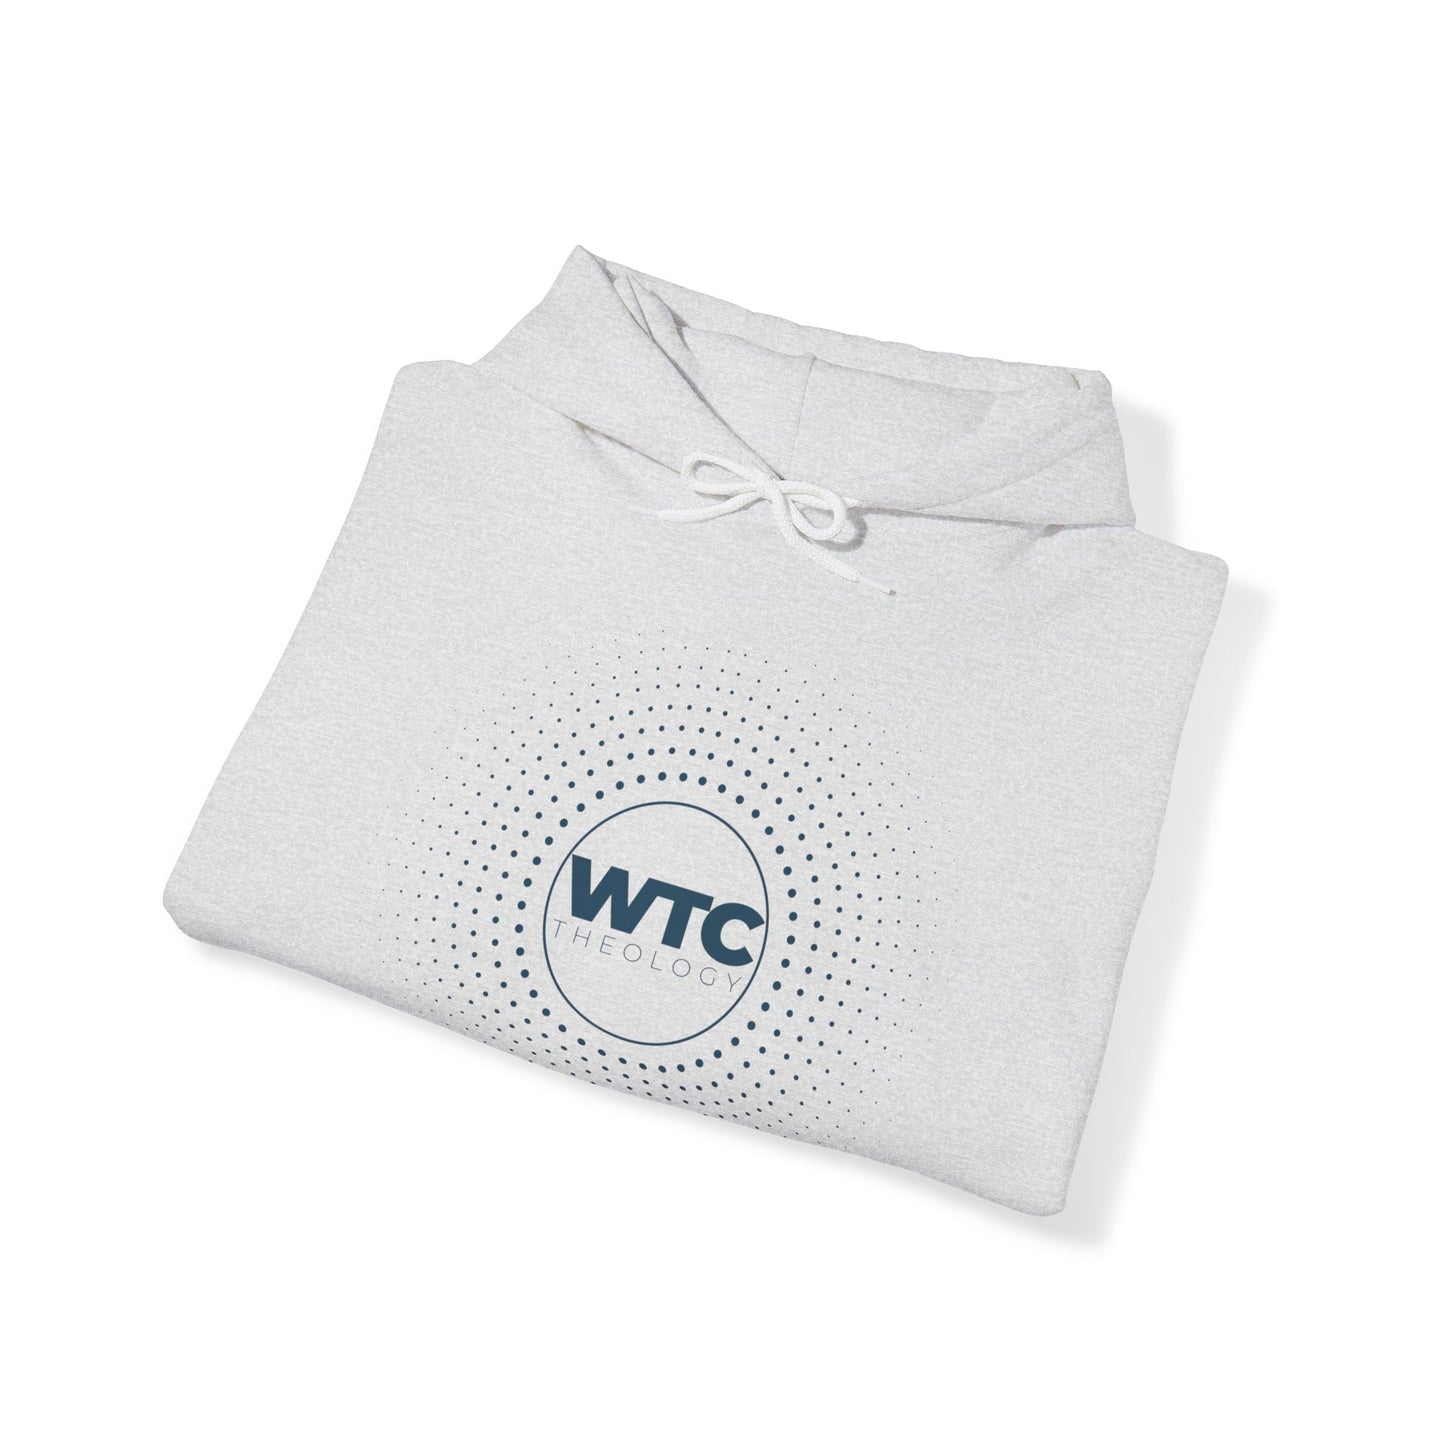 WTC Theology Unisex Heavy Blend™ Hooded Sweatshirt